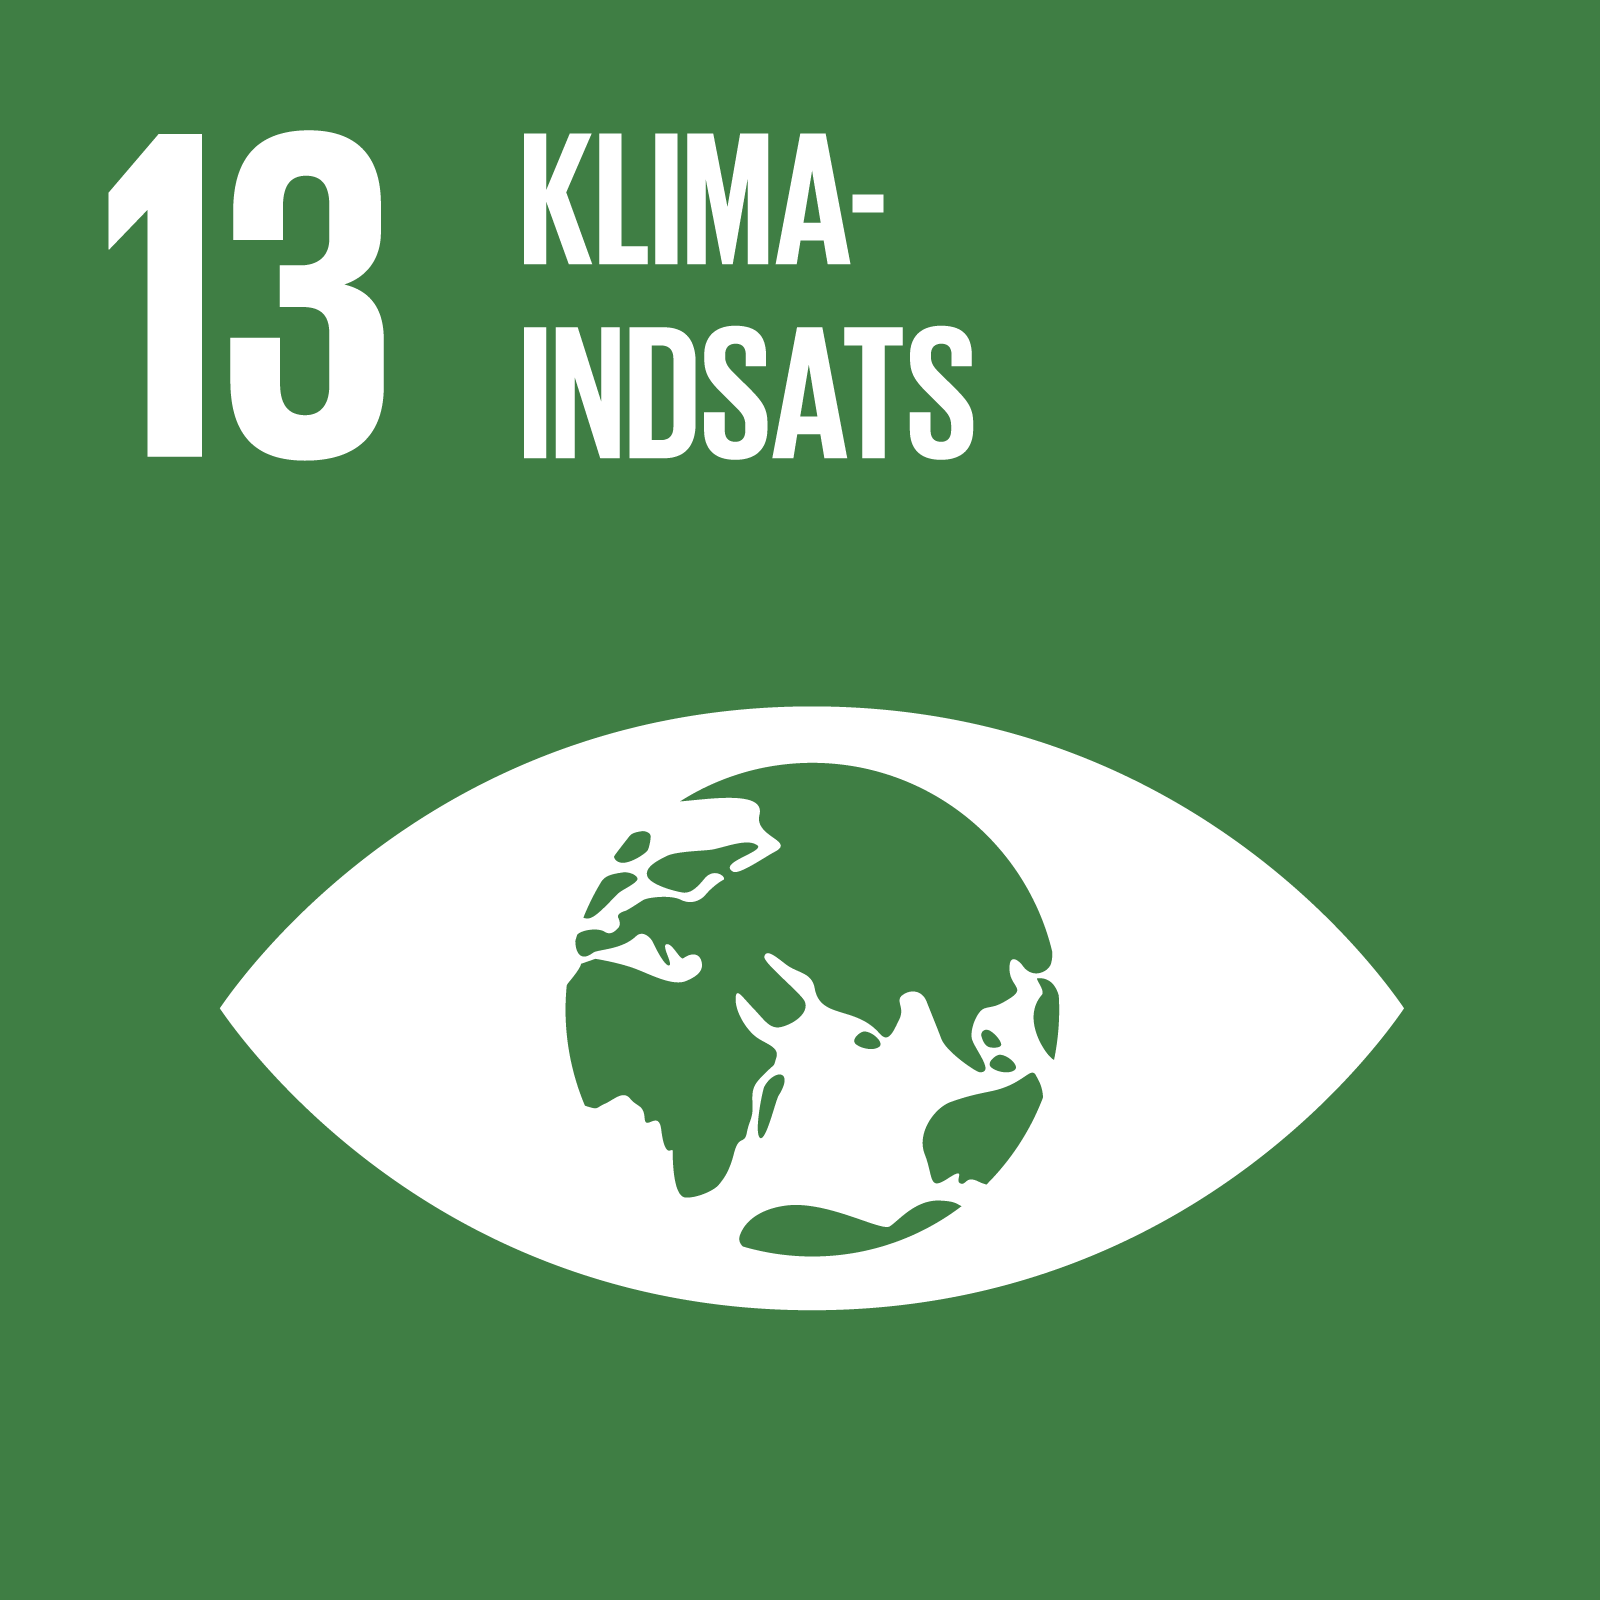 Verdensmål 13 logo Klimaindsats